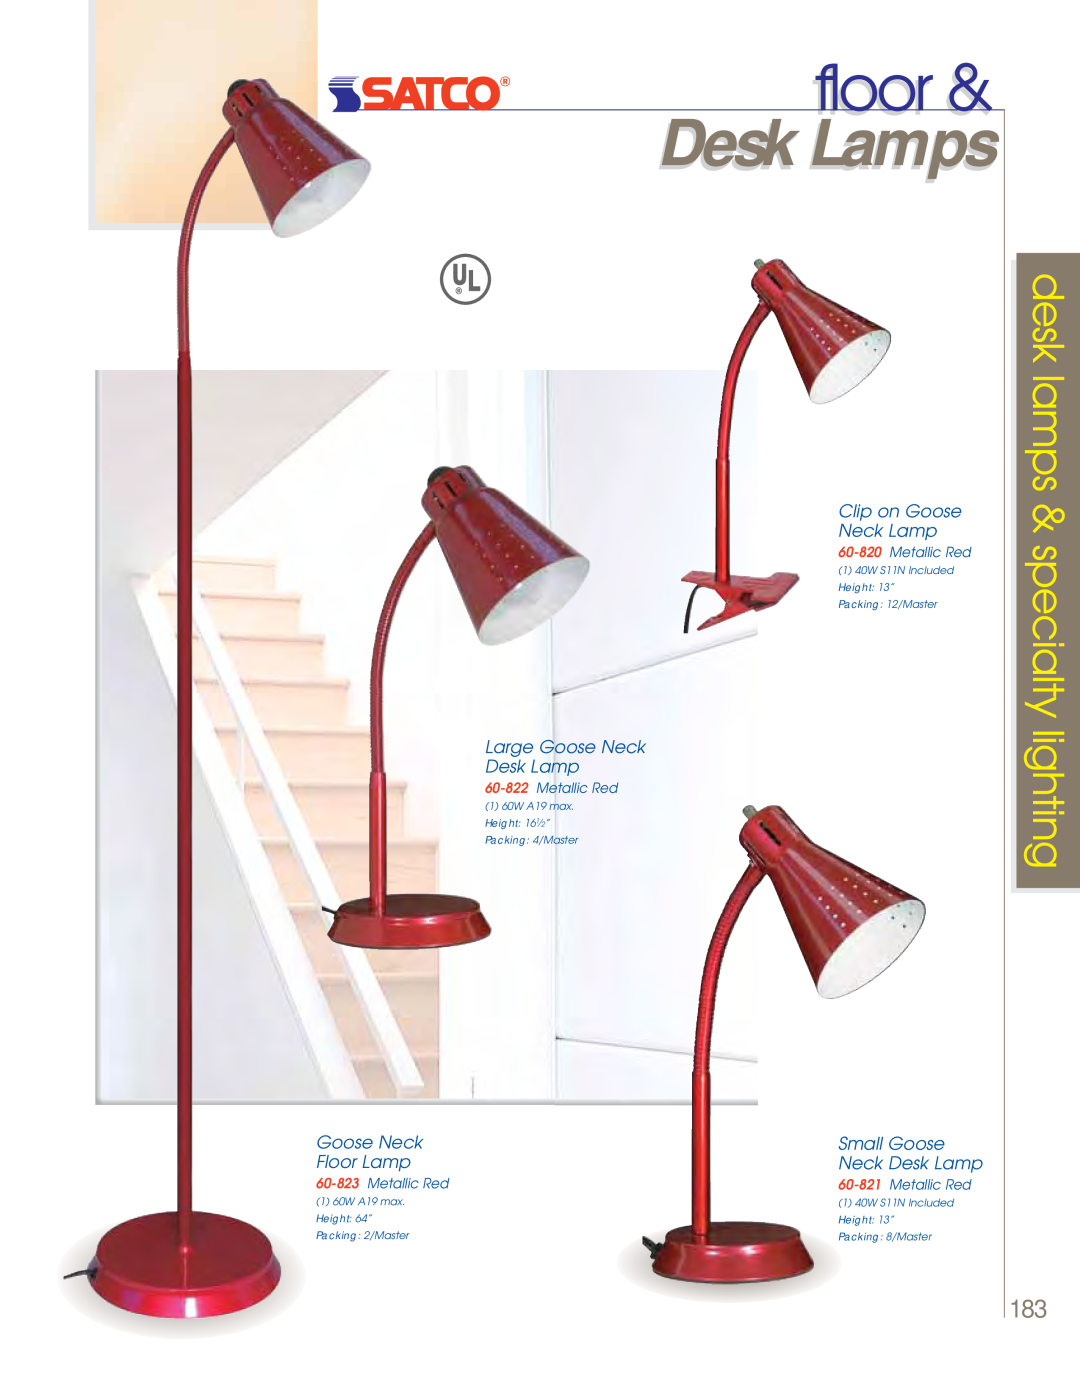 Satco Products 60-800 floor, Desk Lamps, desk lamps & specialty lighting, Goose Neck Floor Lamp, Clip on Goose Neck Lamp 